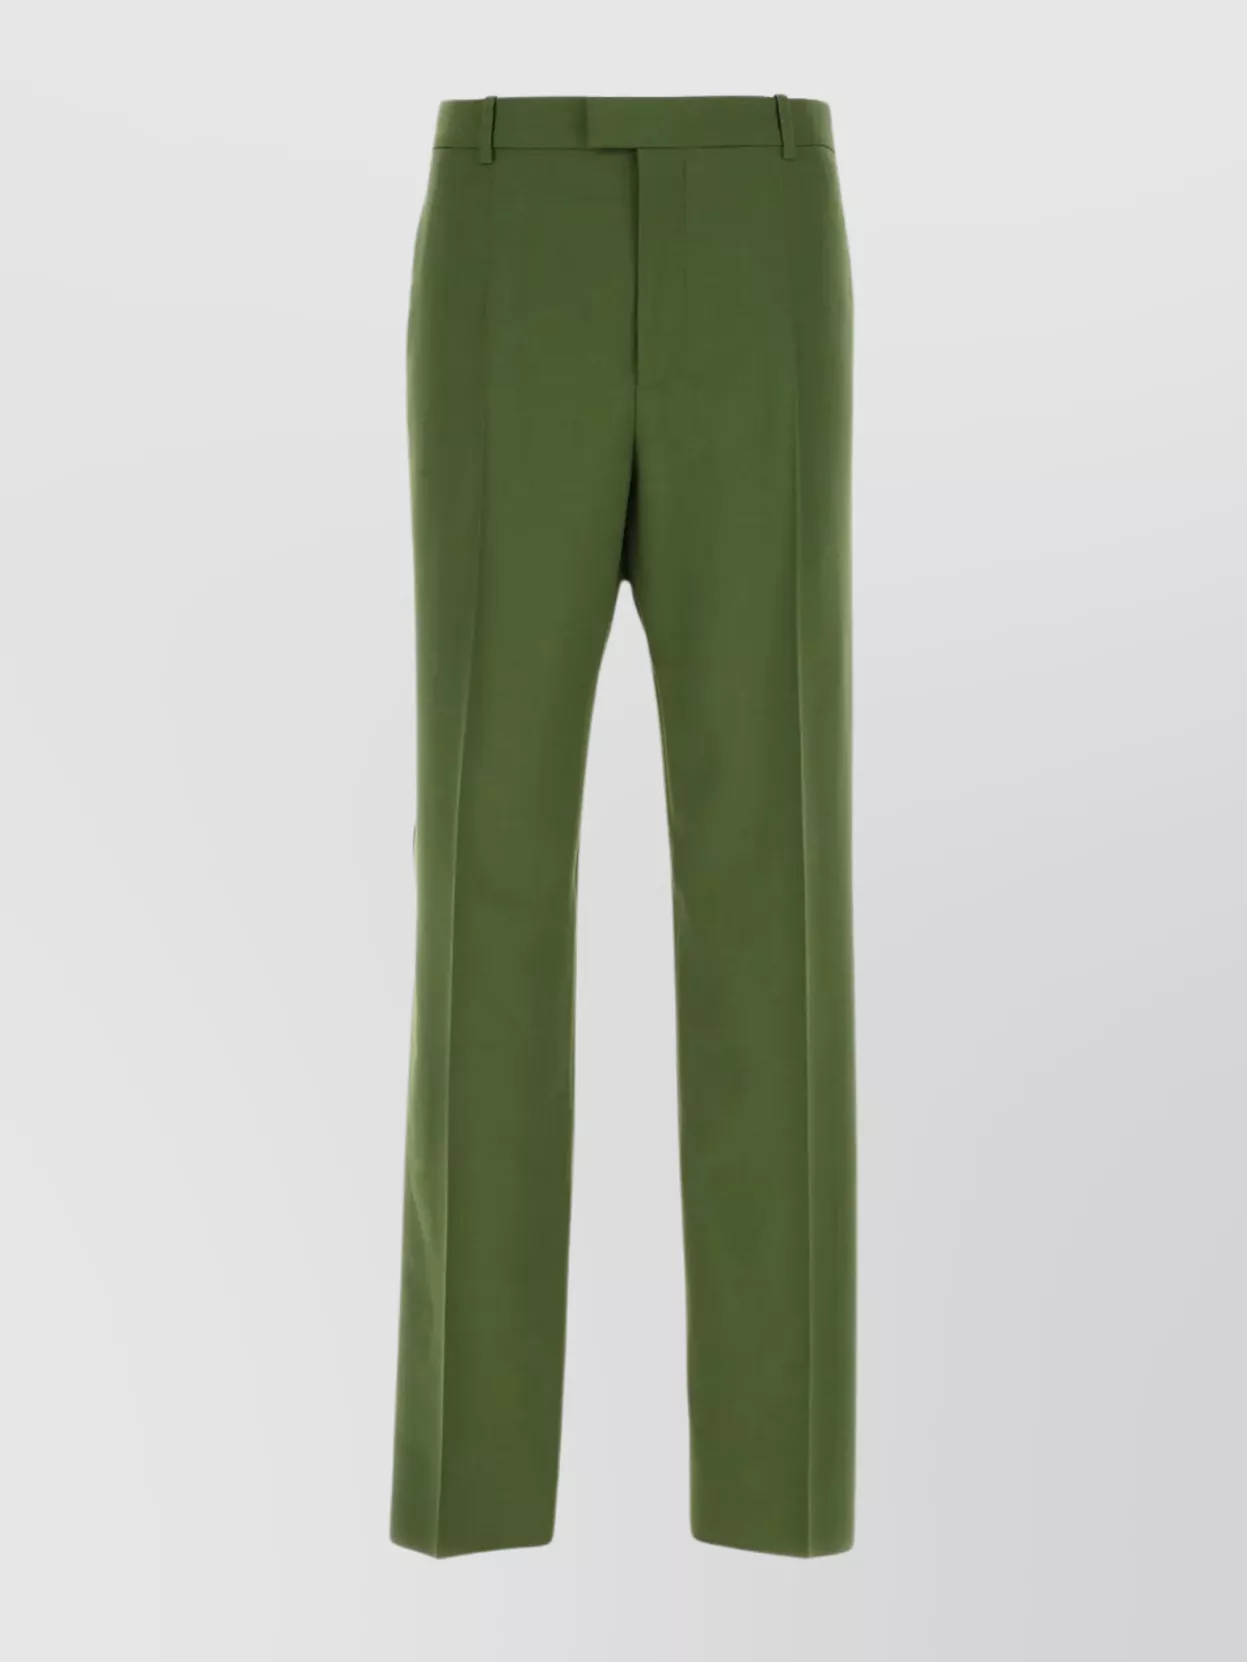 Bottega Veneta Wool Trousers With Back Pockets And Belt Loops In Green